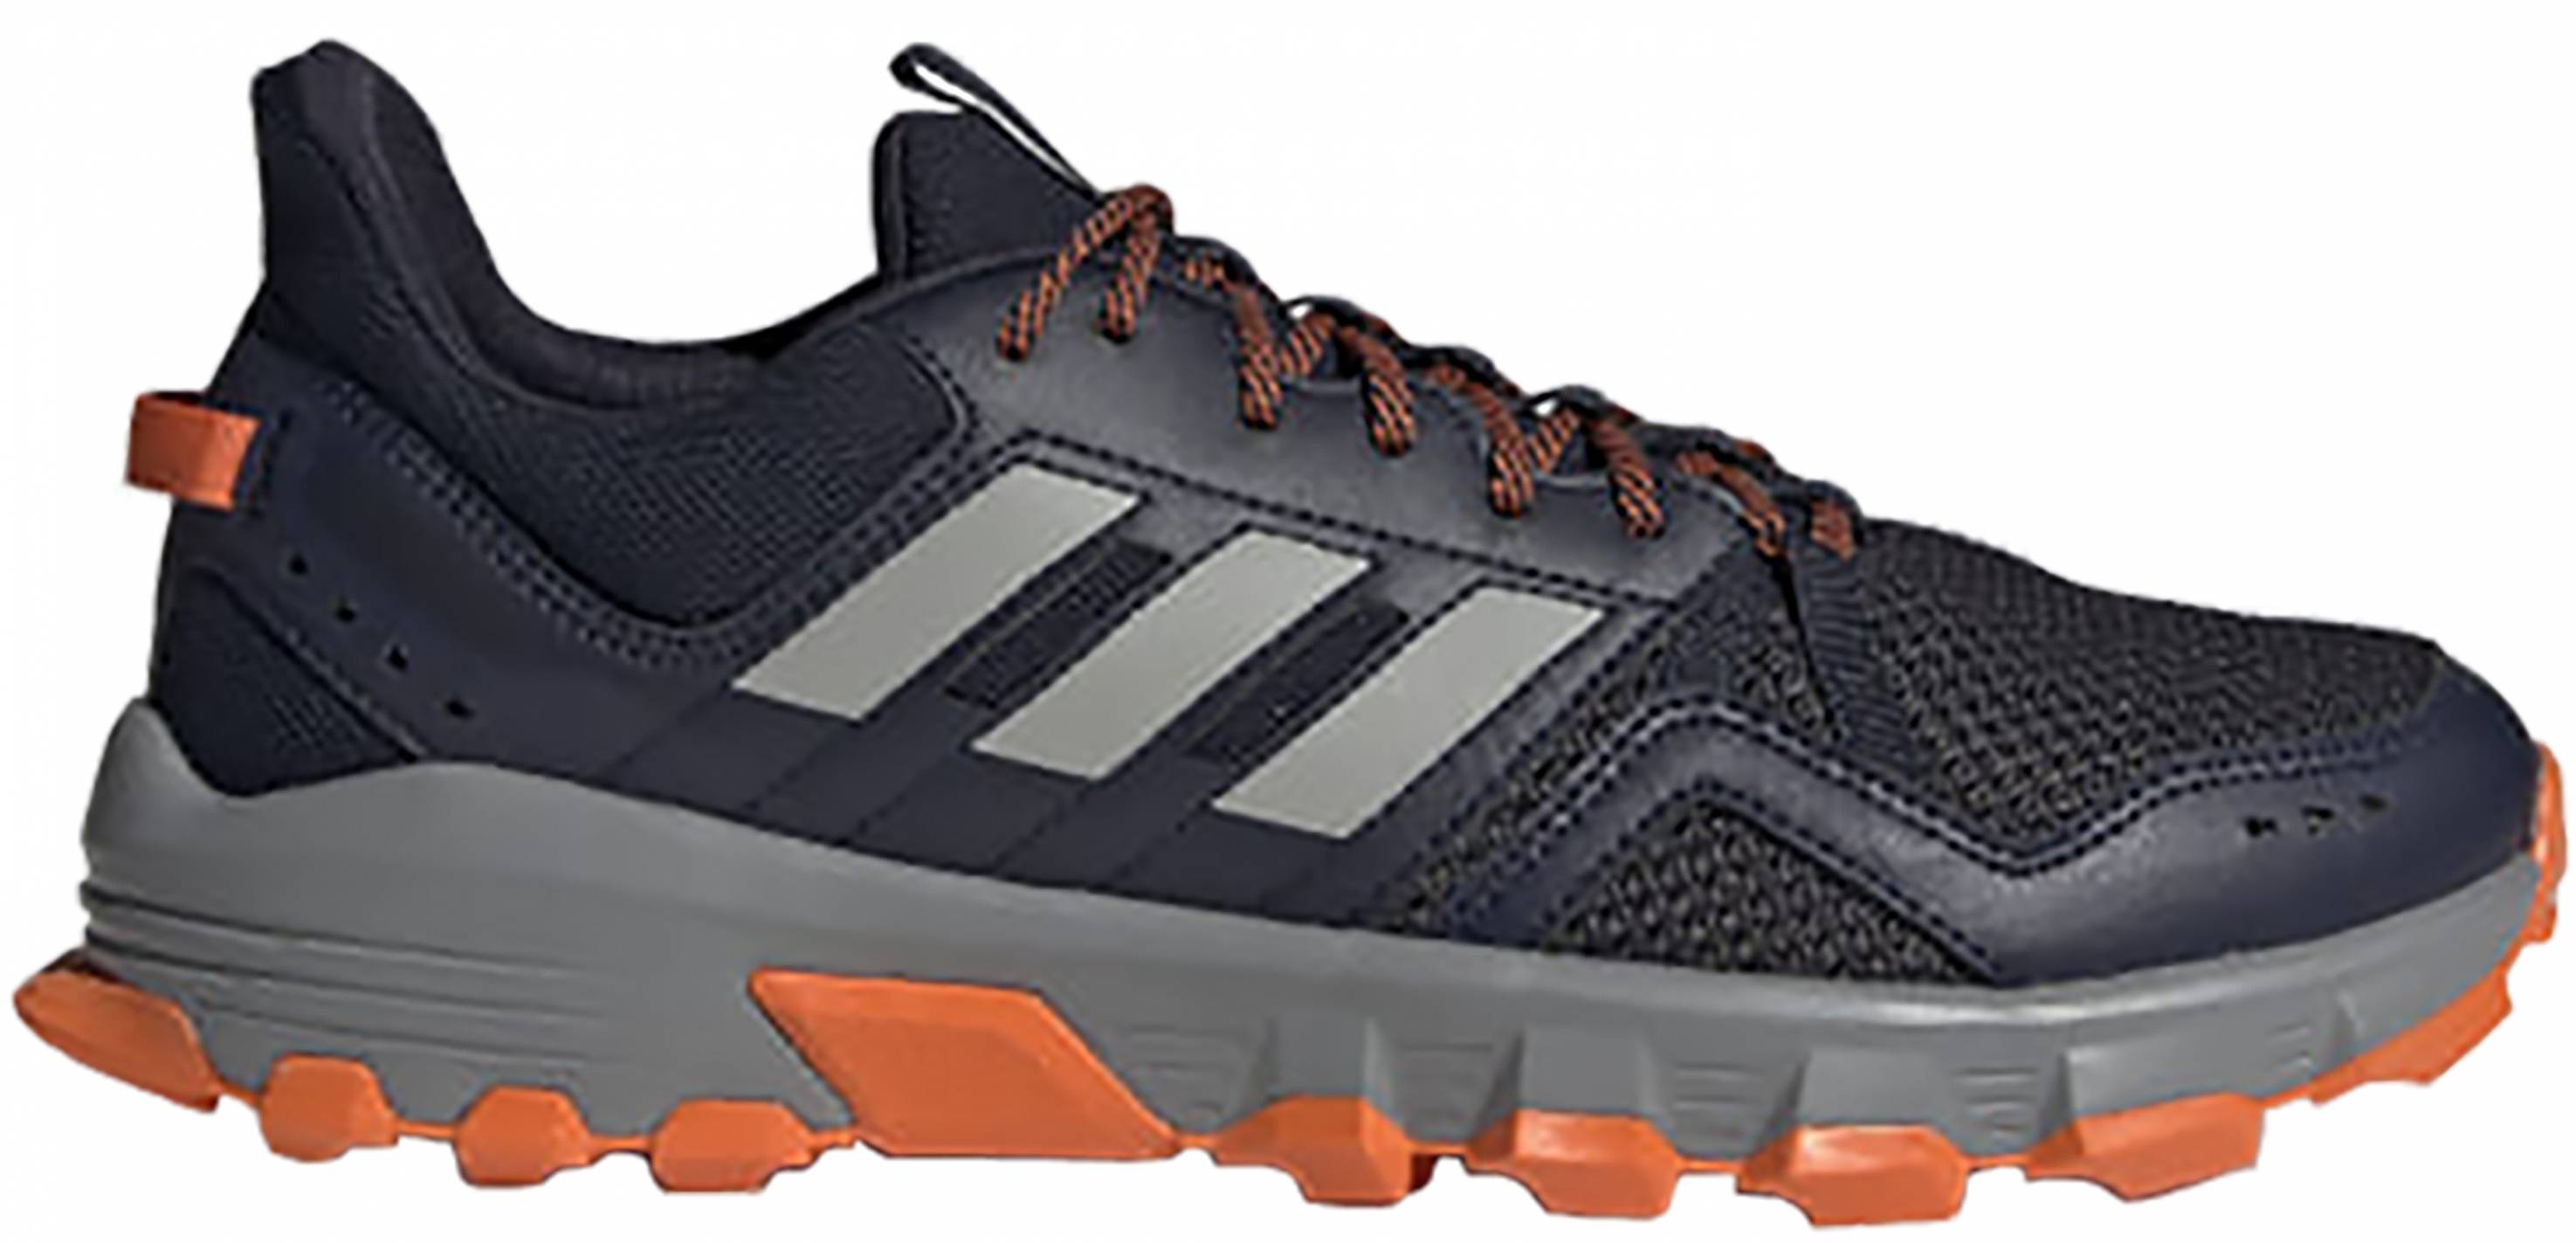 adidas rockadia trail men's running shoes